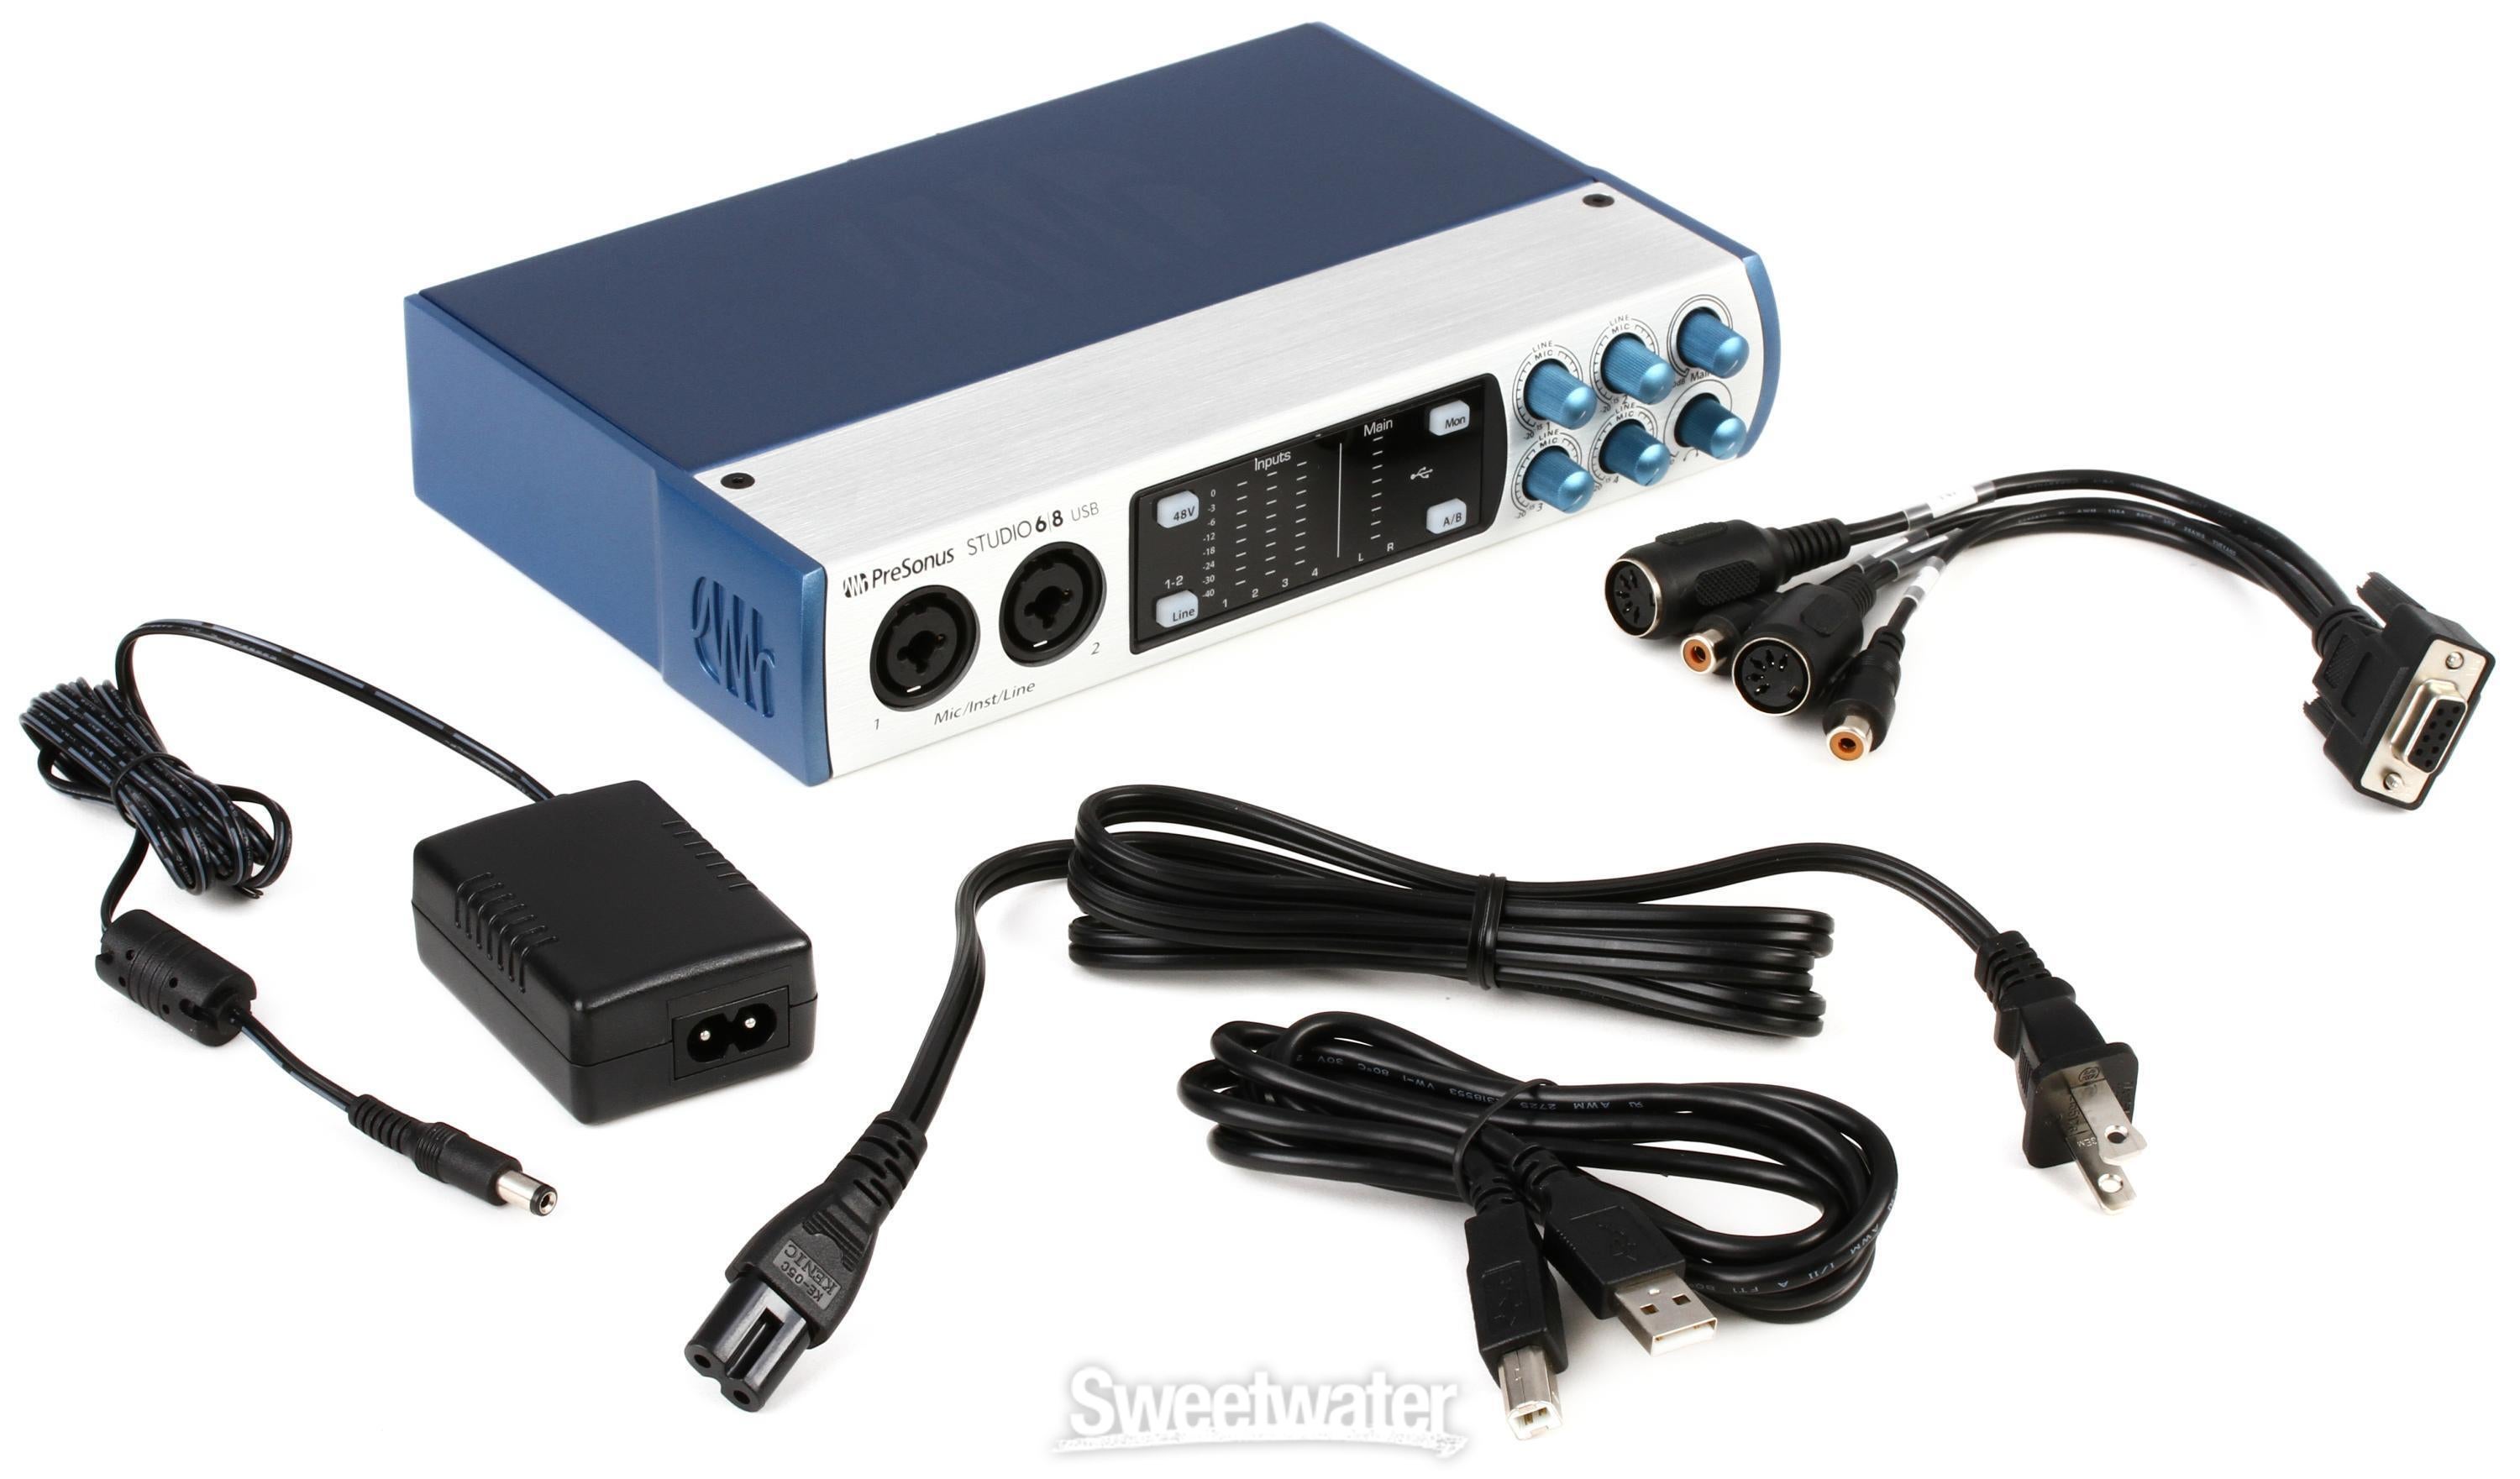 PreSonus Studio 6|8 USB 6x6 USB Audio Interface with 4 XMAX